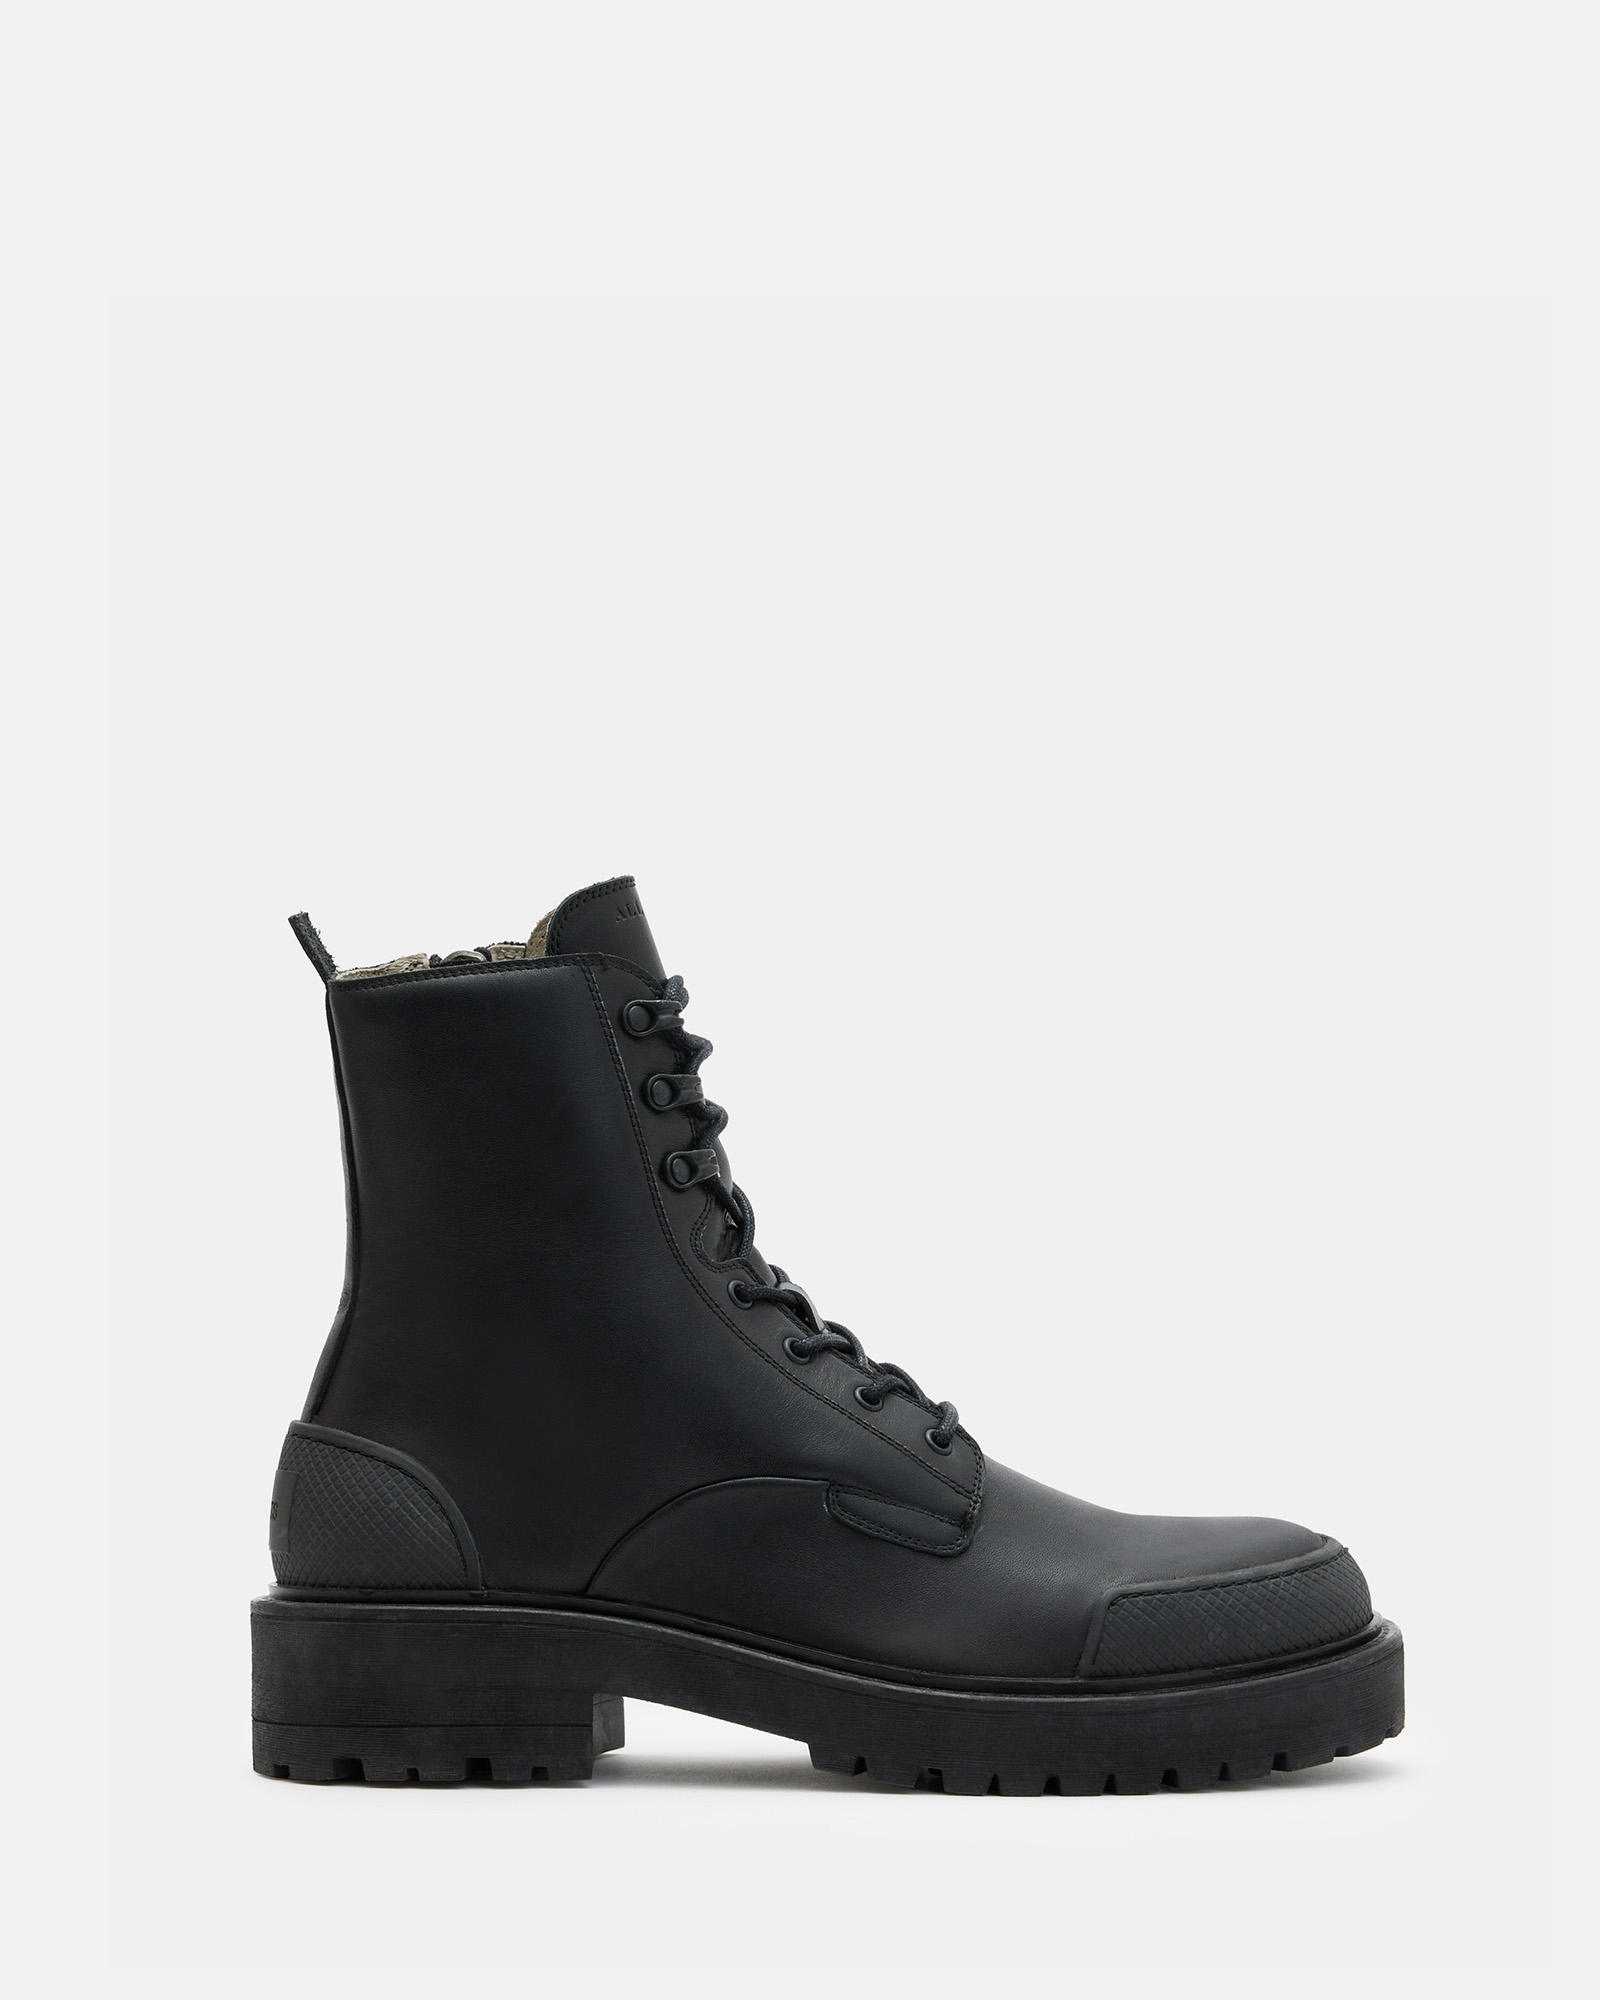 AllSaints Mudfox Lace Up Chunky Leather Boots,, Black, Size: UK